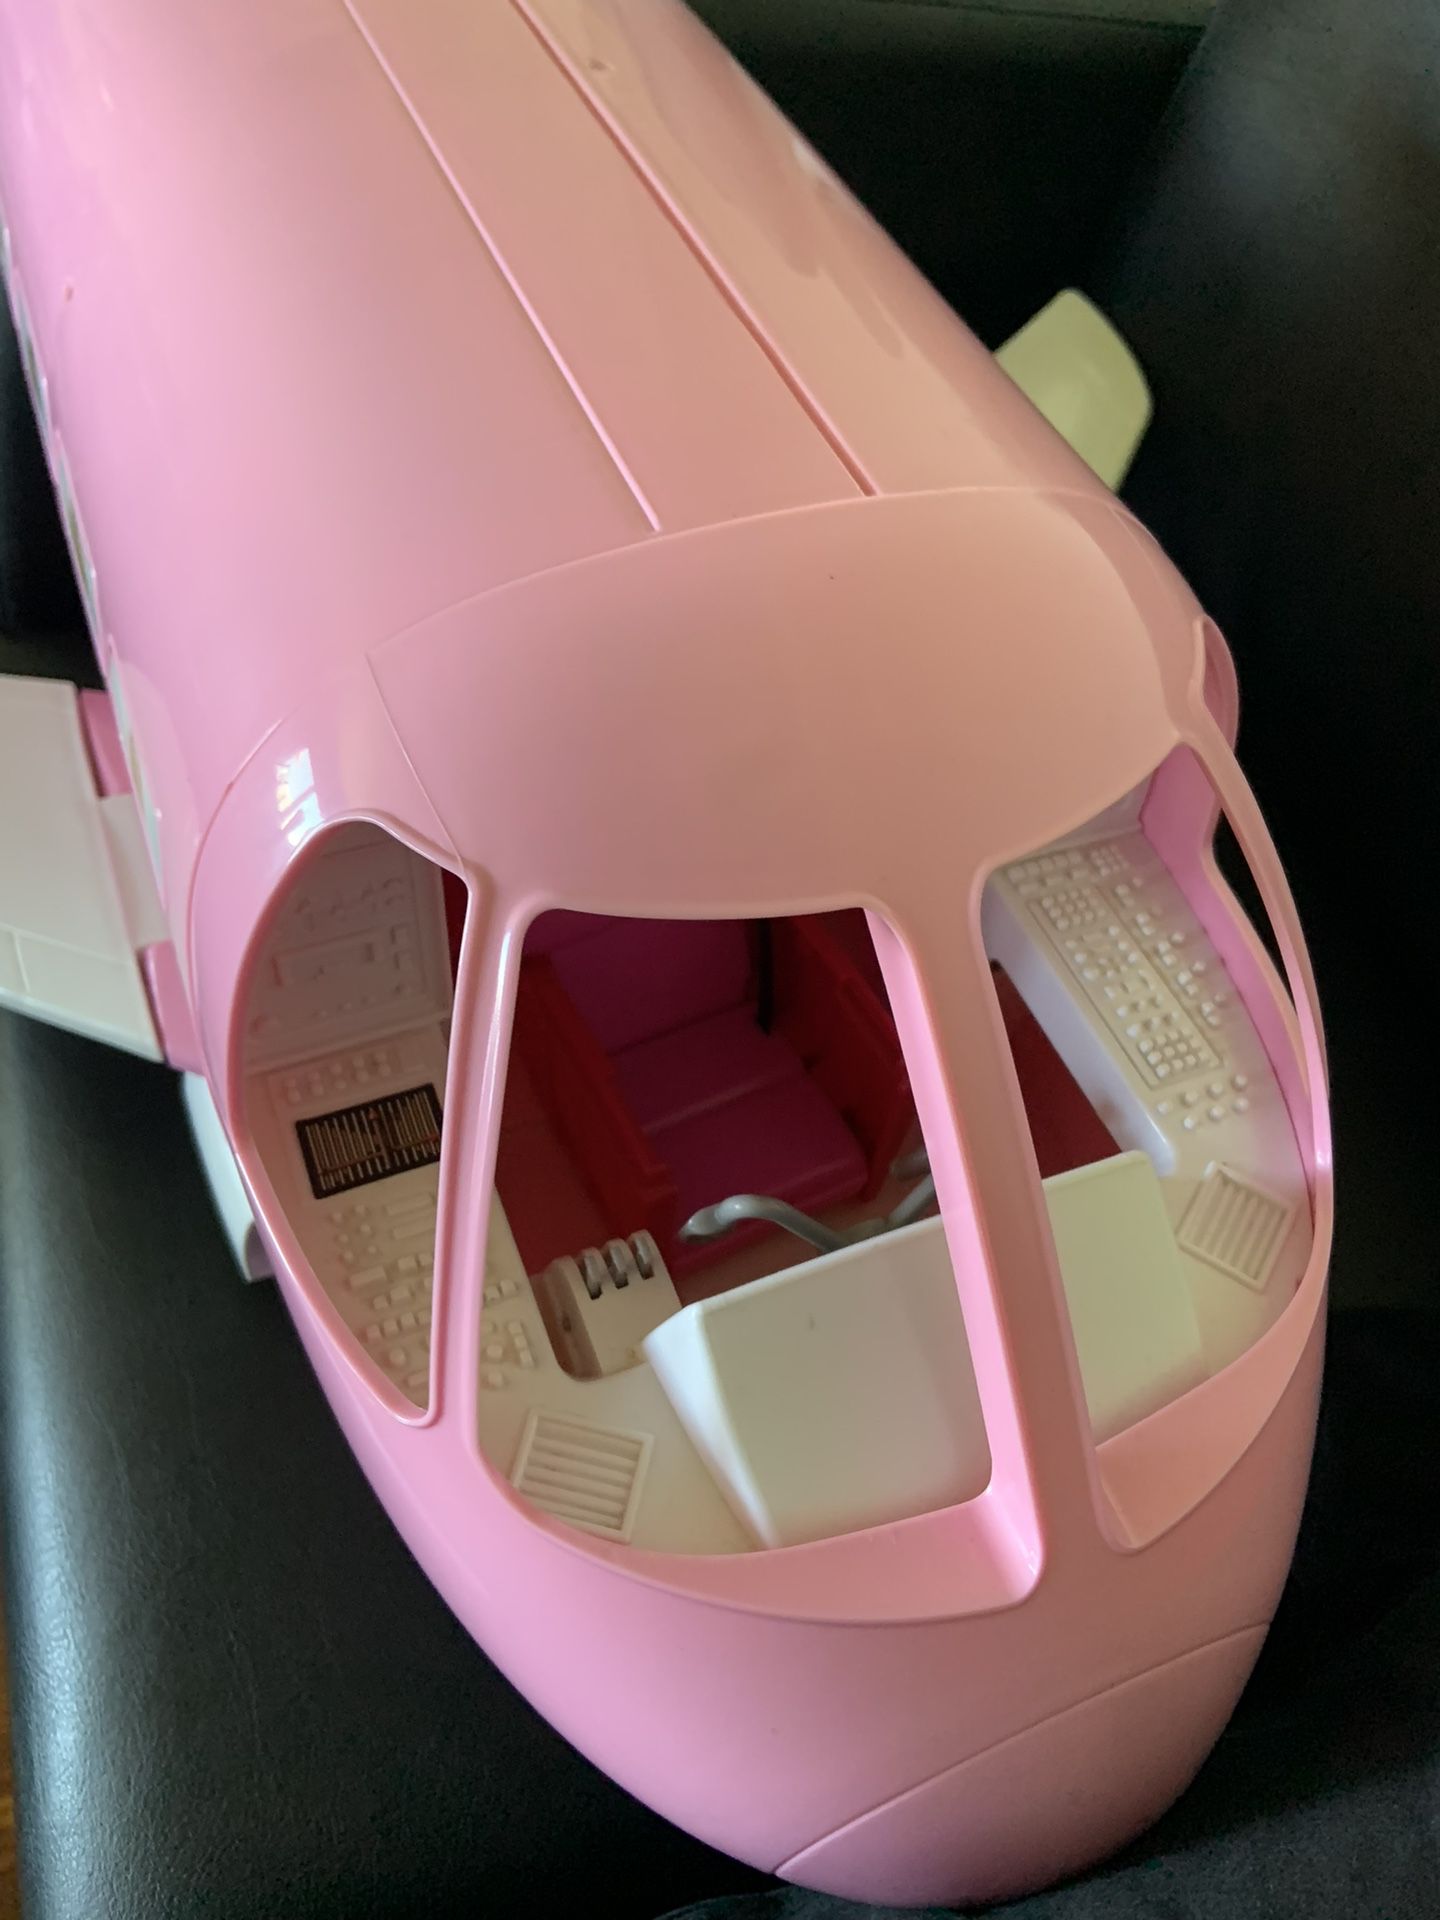 Vintage 1999 Mattel Barbie Doll Pink Jumbo Jet Airplane Plane Excellent Condition